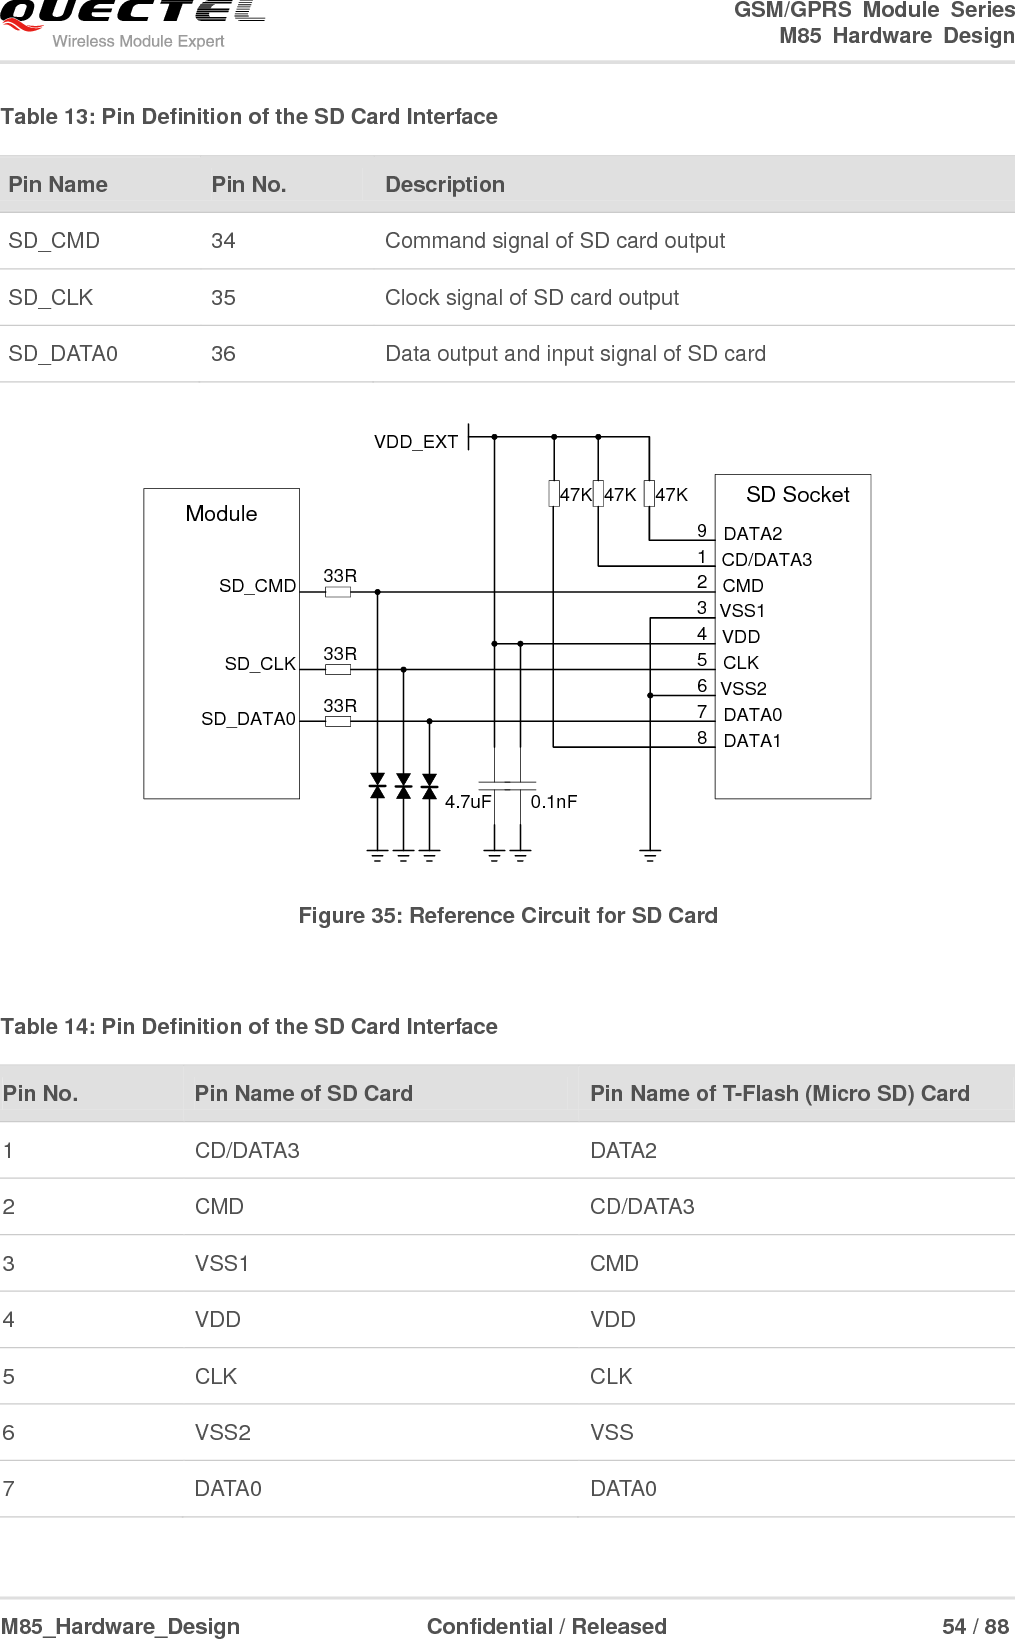                                                                                                                                               GSM/GPRS  Module  Series                                                                 M85  Hardware  Design  M85_Hardware_Design                  Confidential / Released                             54 / 88      Table 13: Pin Definition of the SD Card Interface  ModuleSD_DATA0SD_CLKSD_CMDDATA2DATA1DATA0CD/DATA3CMDVSS1VDDCLKVSS247K47K 47K4.7uF 0.1nFVDD_EXT33R33R33RSD Socket123456789 Figure 35: Reference Circuit for SD Card  Table 14: Pin Definition of the SD Card Interface Pin Name   Pin No. Description SD_CMD 34 Command signal of SD card output SD_CLK 35 Clock signal of SD card output SD_DATA0 36 Data output and input signal of SD card Pin No. Pin Name of SD Card Pin Name of T-Flash (Micro SD) Card 1 CD/DATA3 DATA2 2 CMD   CD/DATA3 3 VSS1 CMD 4 VDD VDD 5 CLK CLK 6 VSS2 VSS 7 DATA0 DATA0 